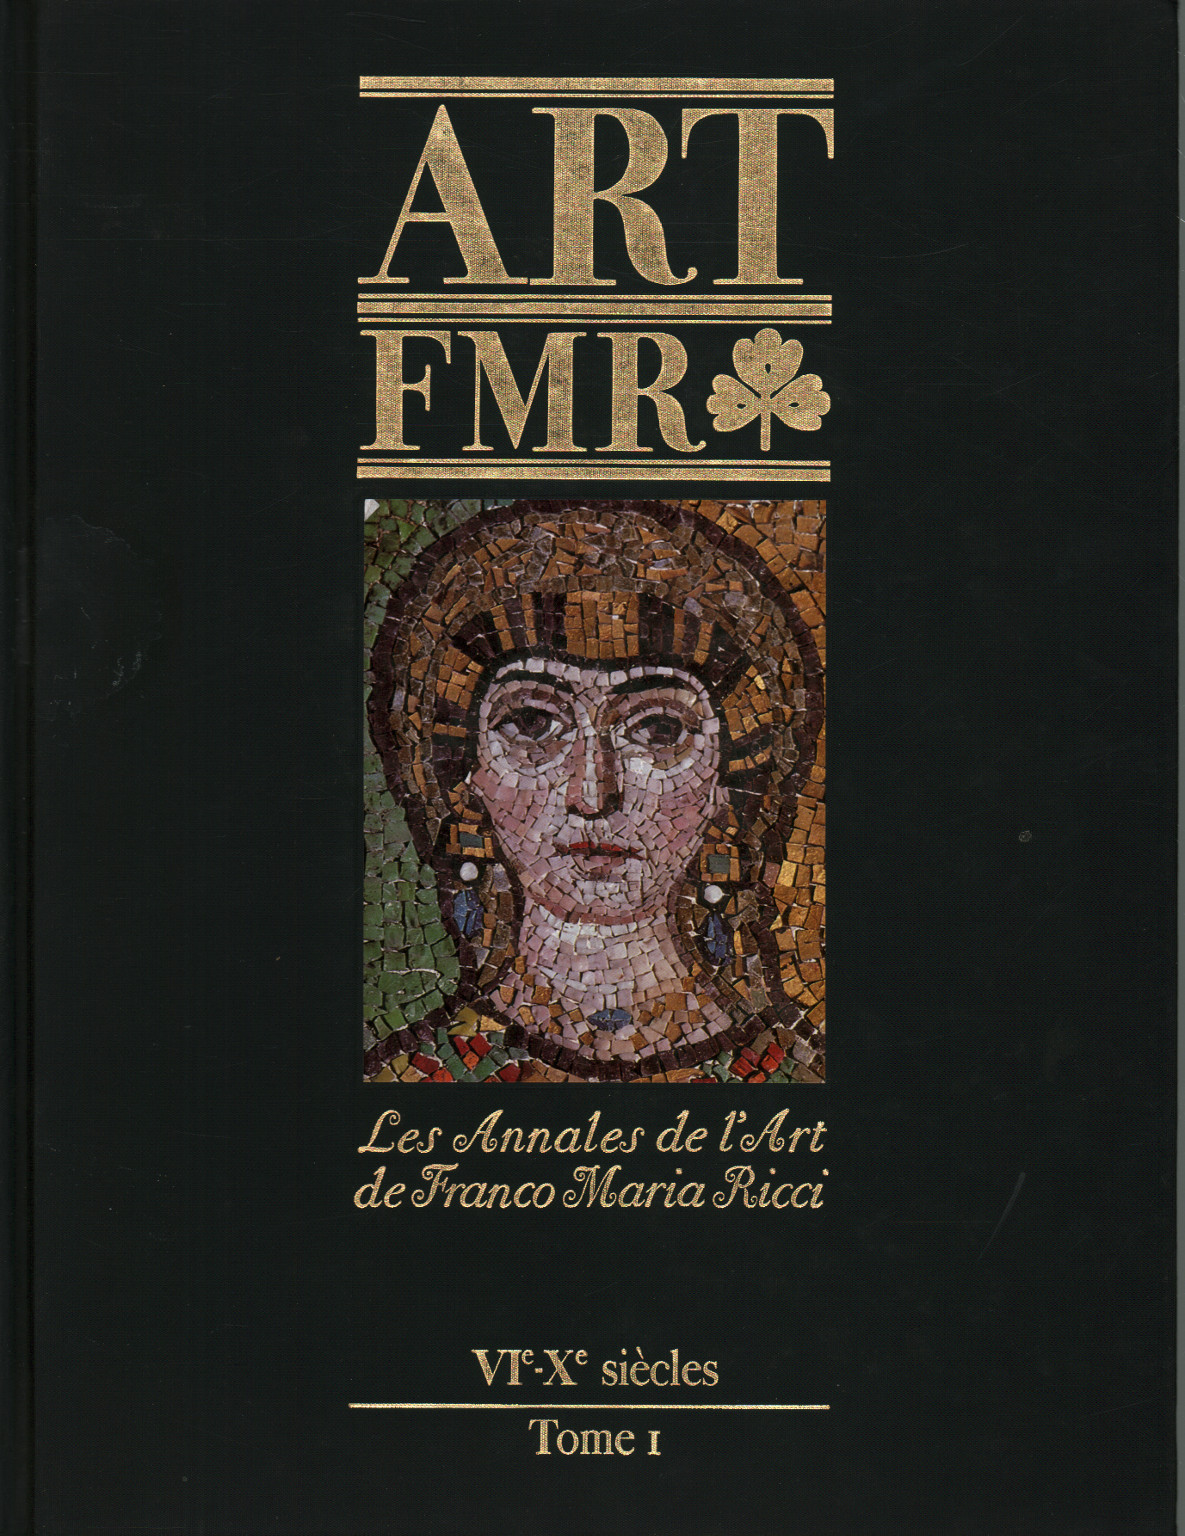 Arte FMR VI-X siècles. Tomo I, s.una.